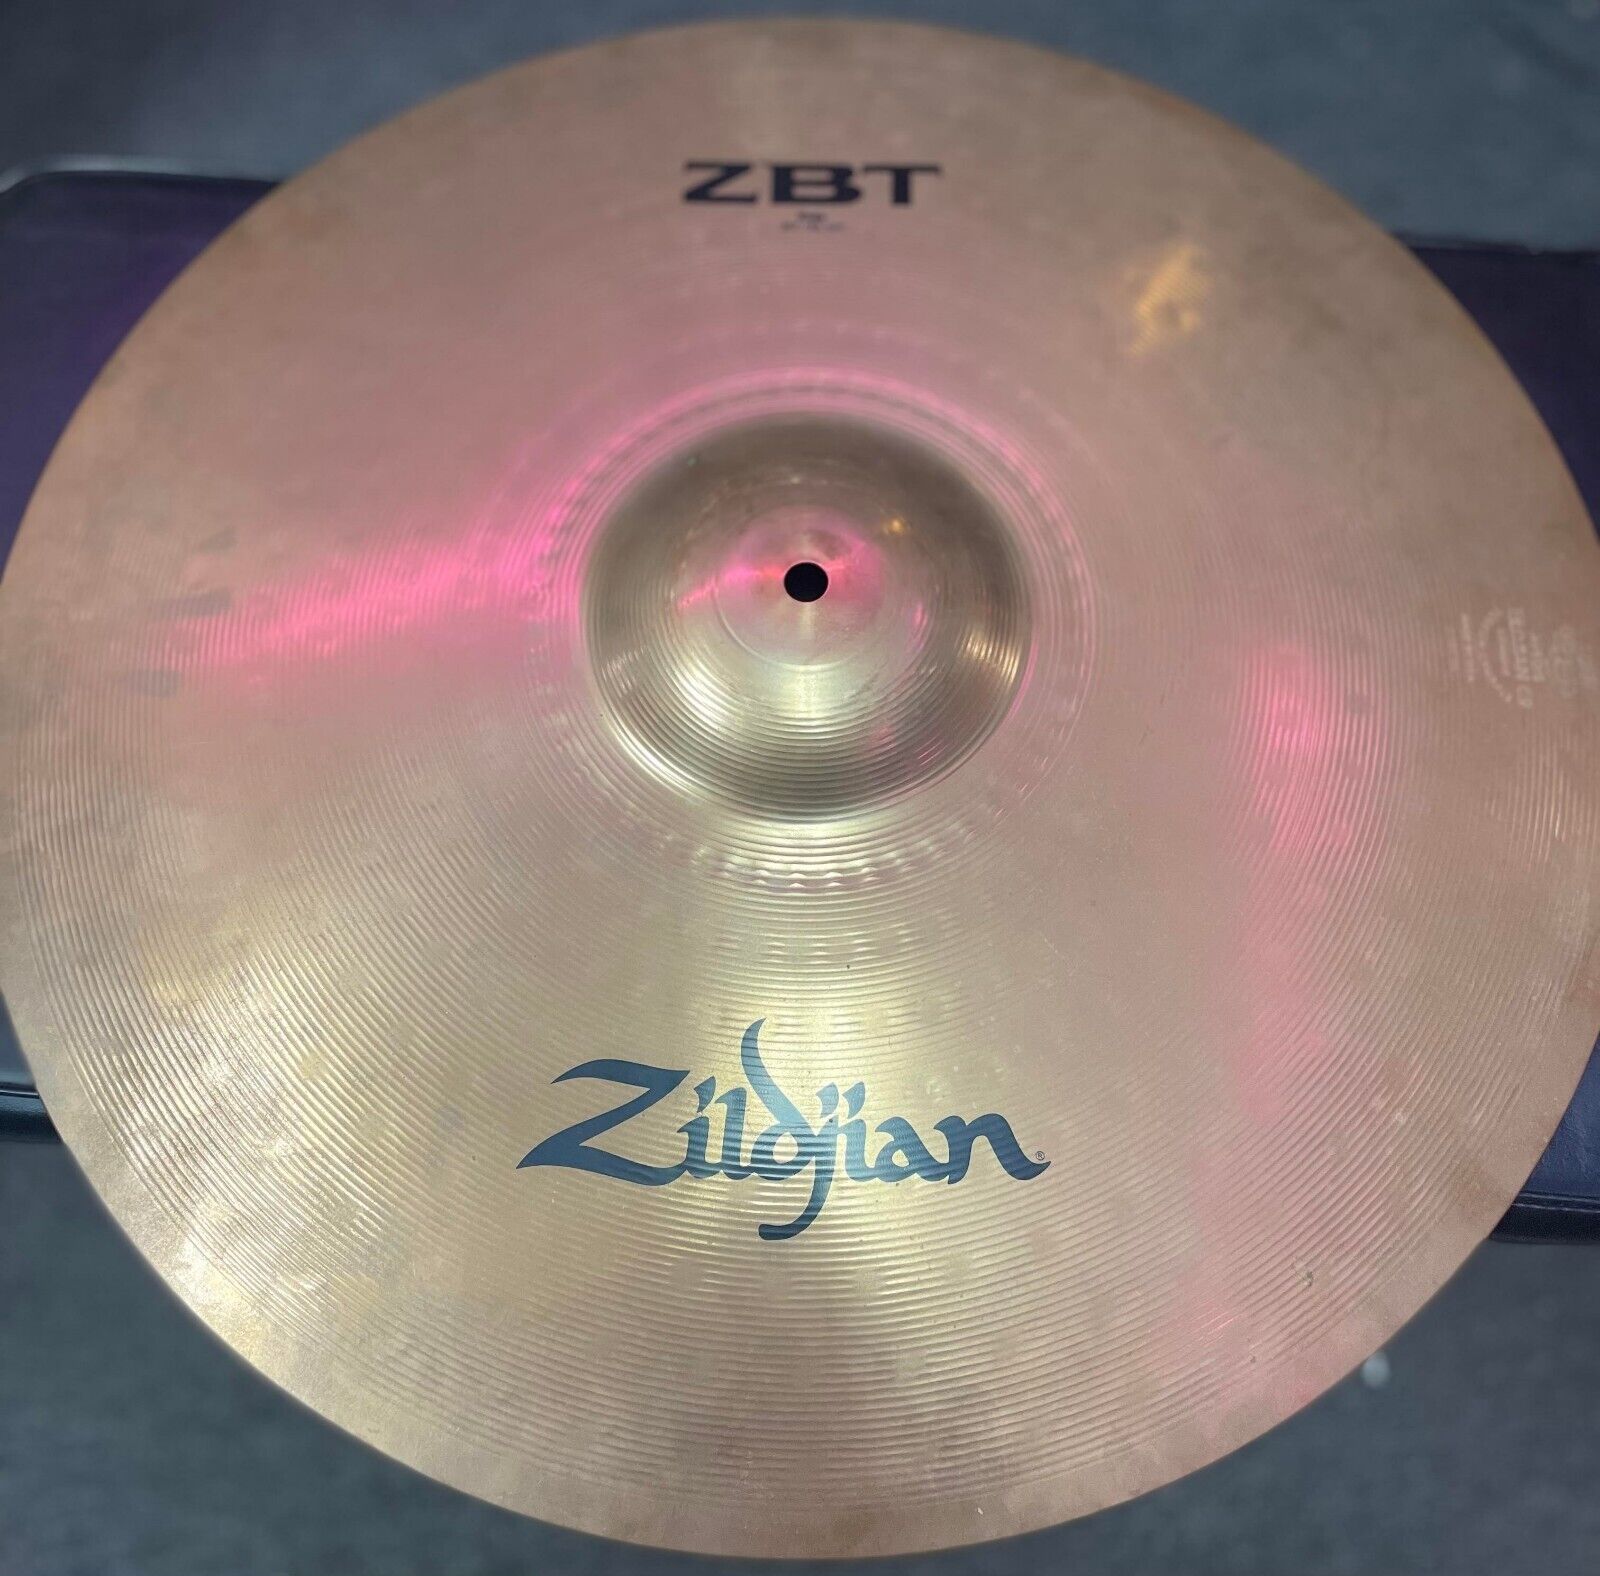 Zildjian Zbt 20" Ride Cymbal